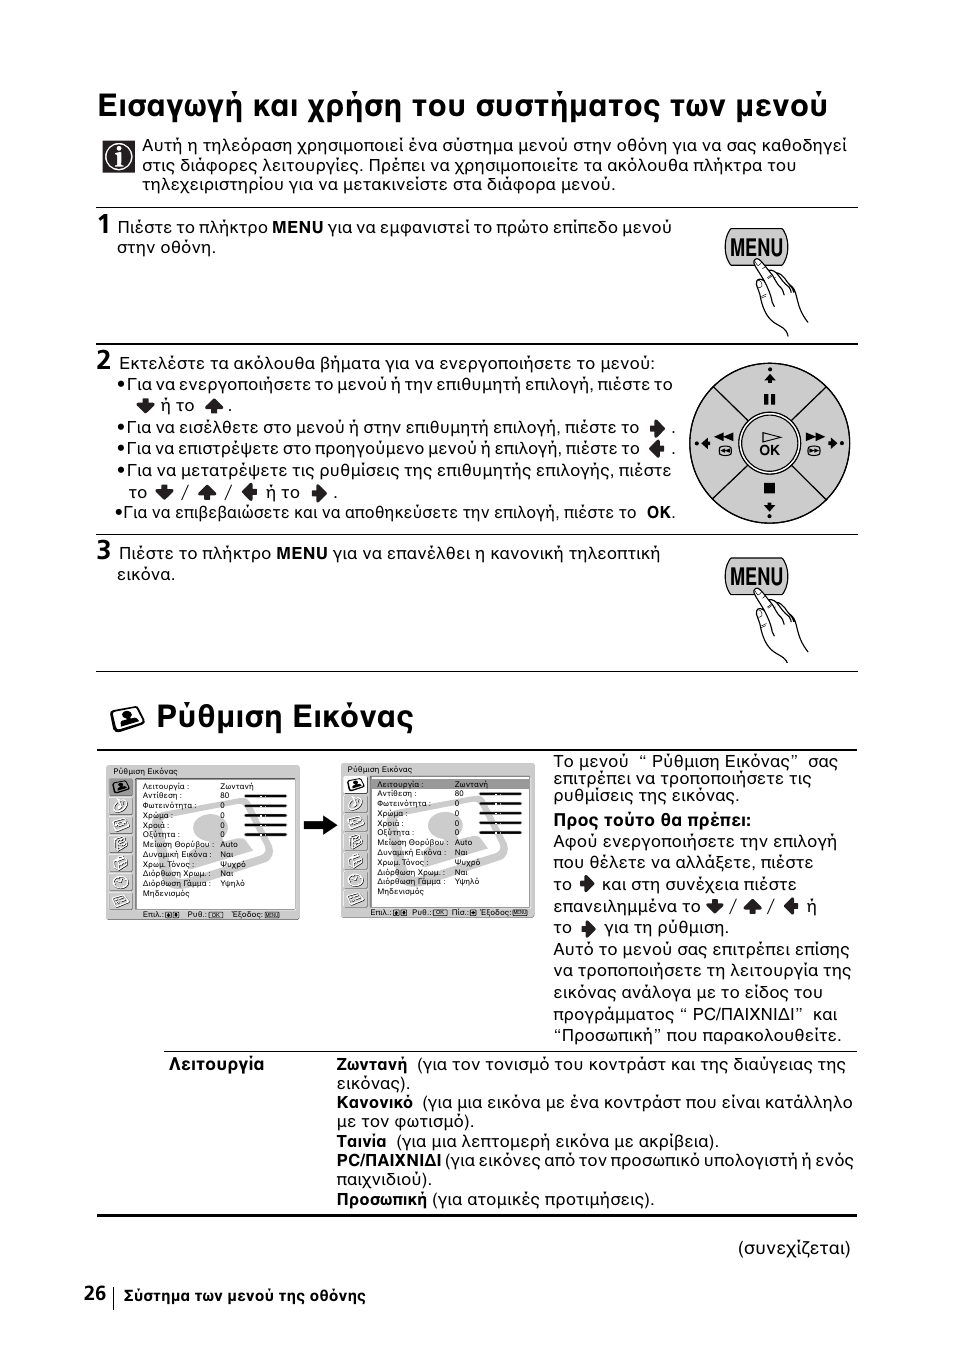 Menu | Sony KE-42MR1 Manuale d'uso | Pagina 252 / 302